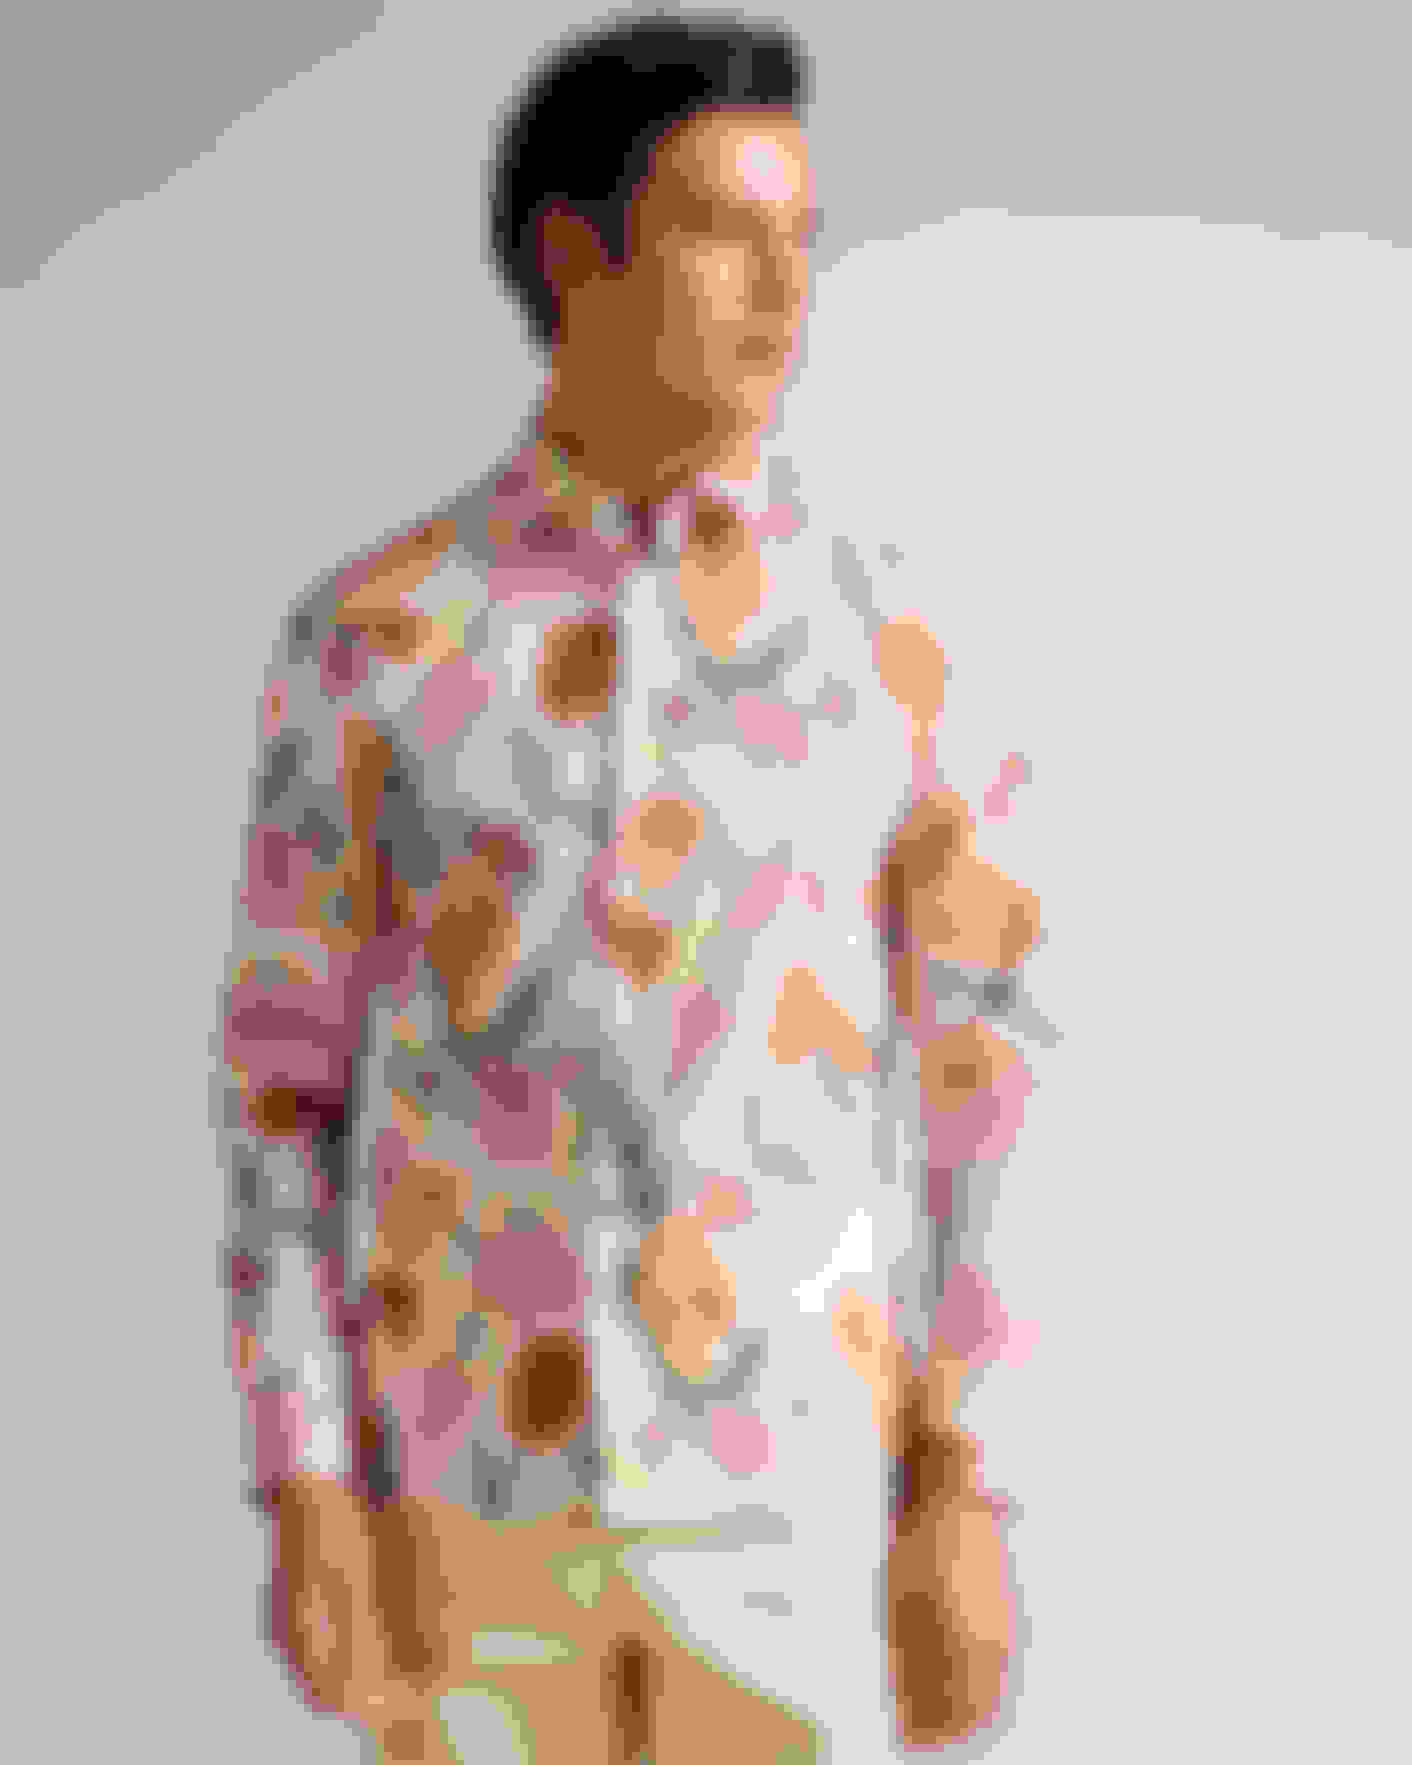 Natural Long Sleeve Floral Printed Shirt Ted Baker